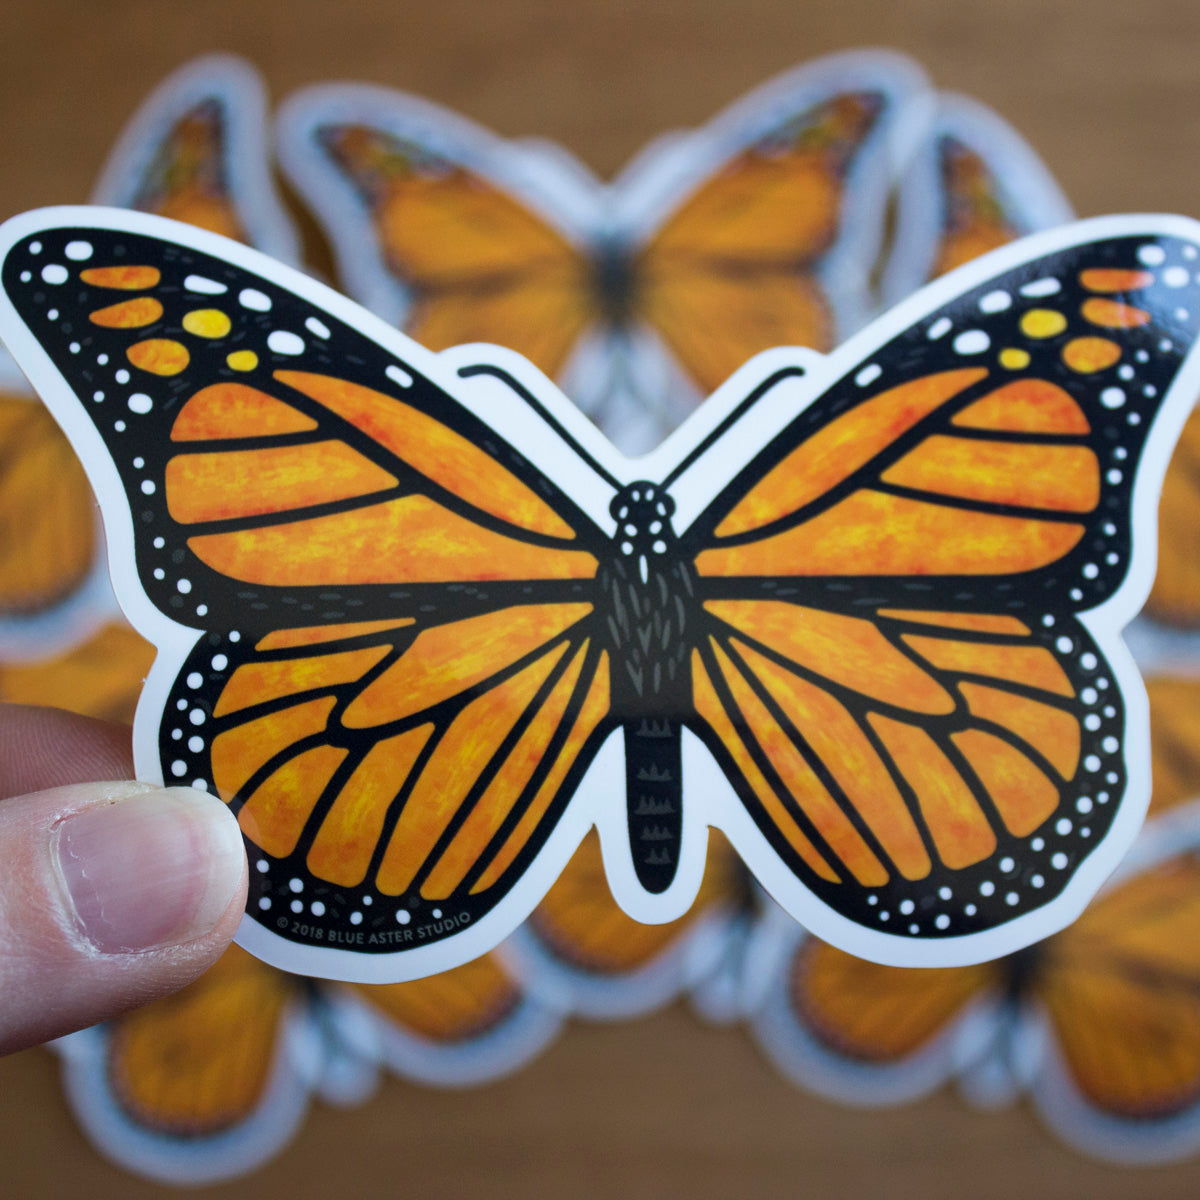 A hand holding a vinyl sticker of a monarch butterfly.